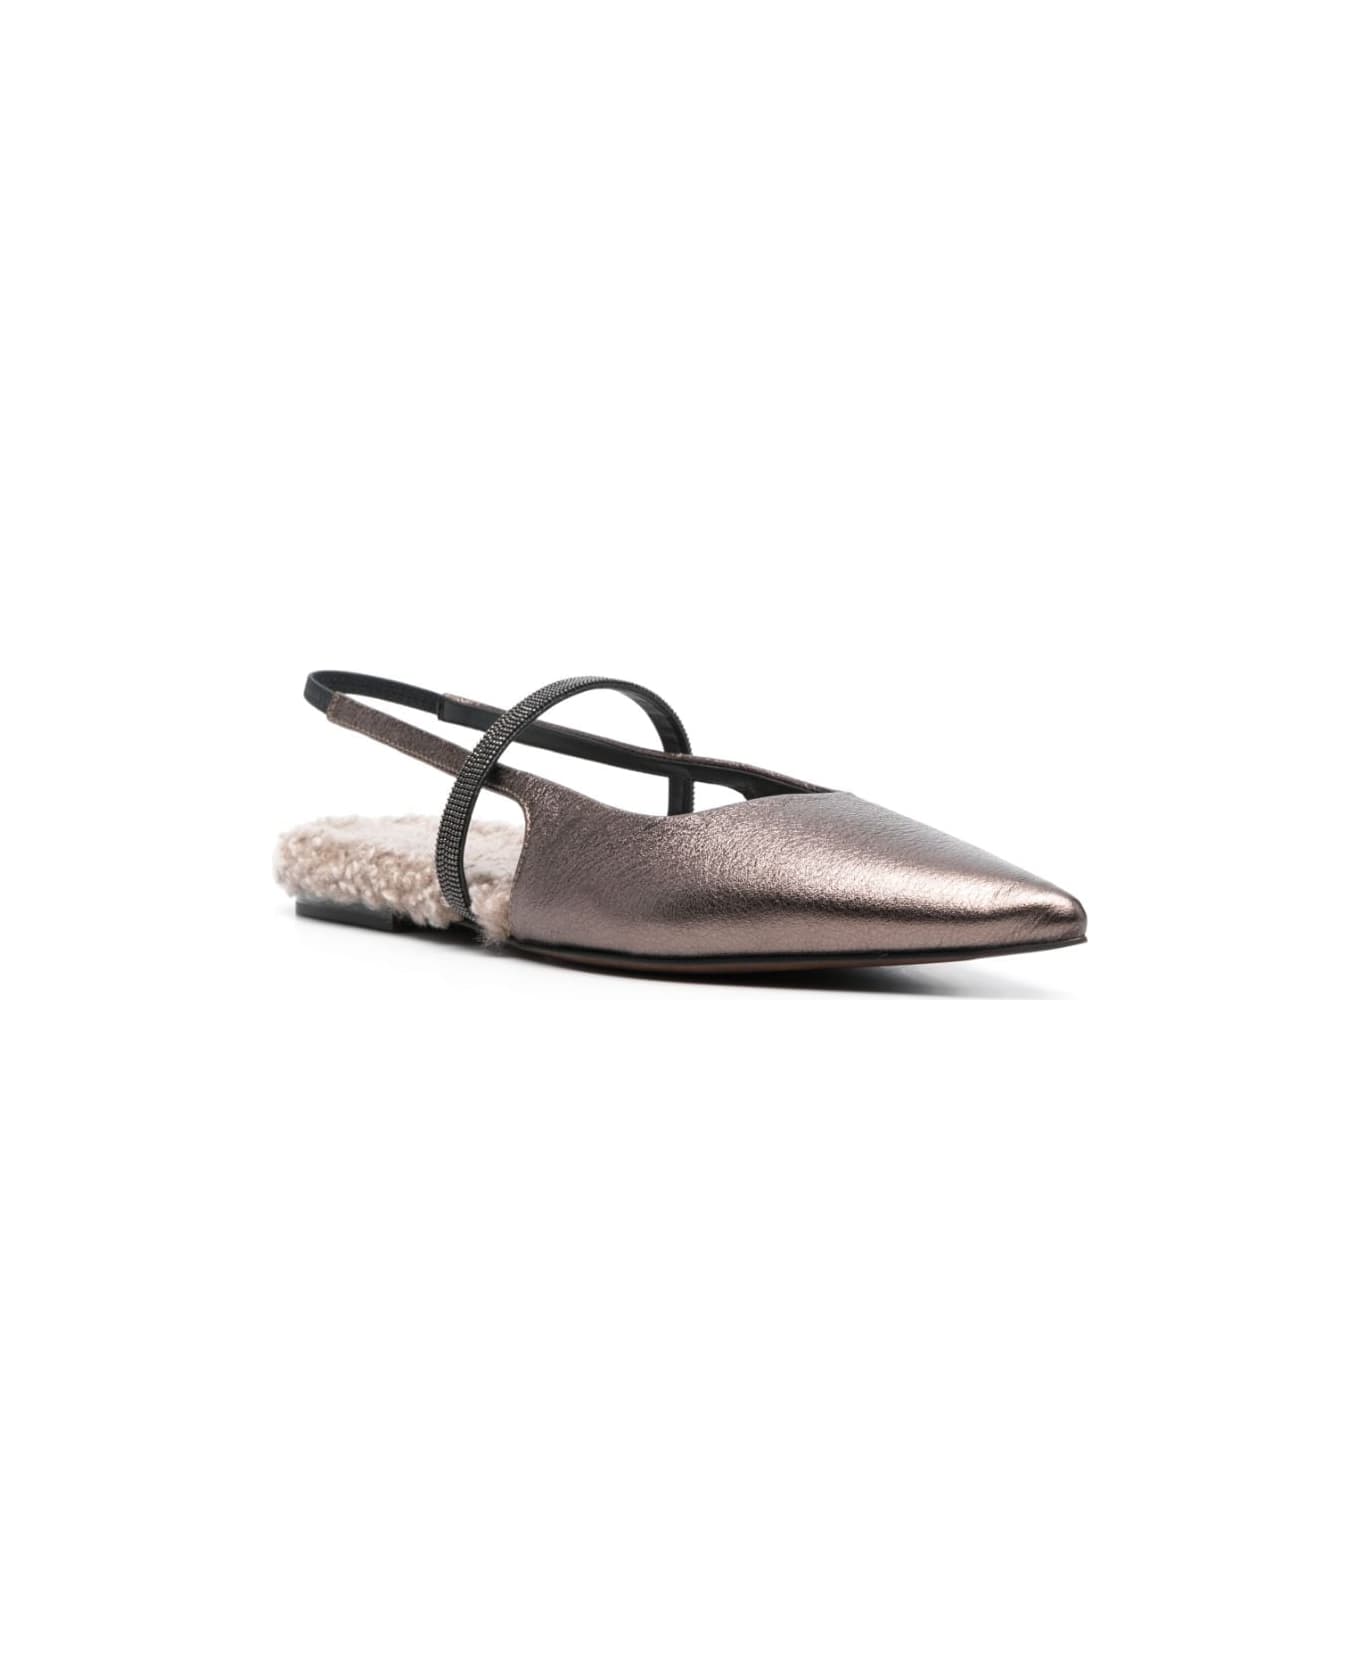 Brunello Cucinelli Shoes - Bronze